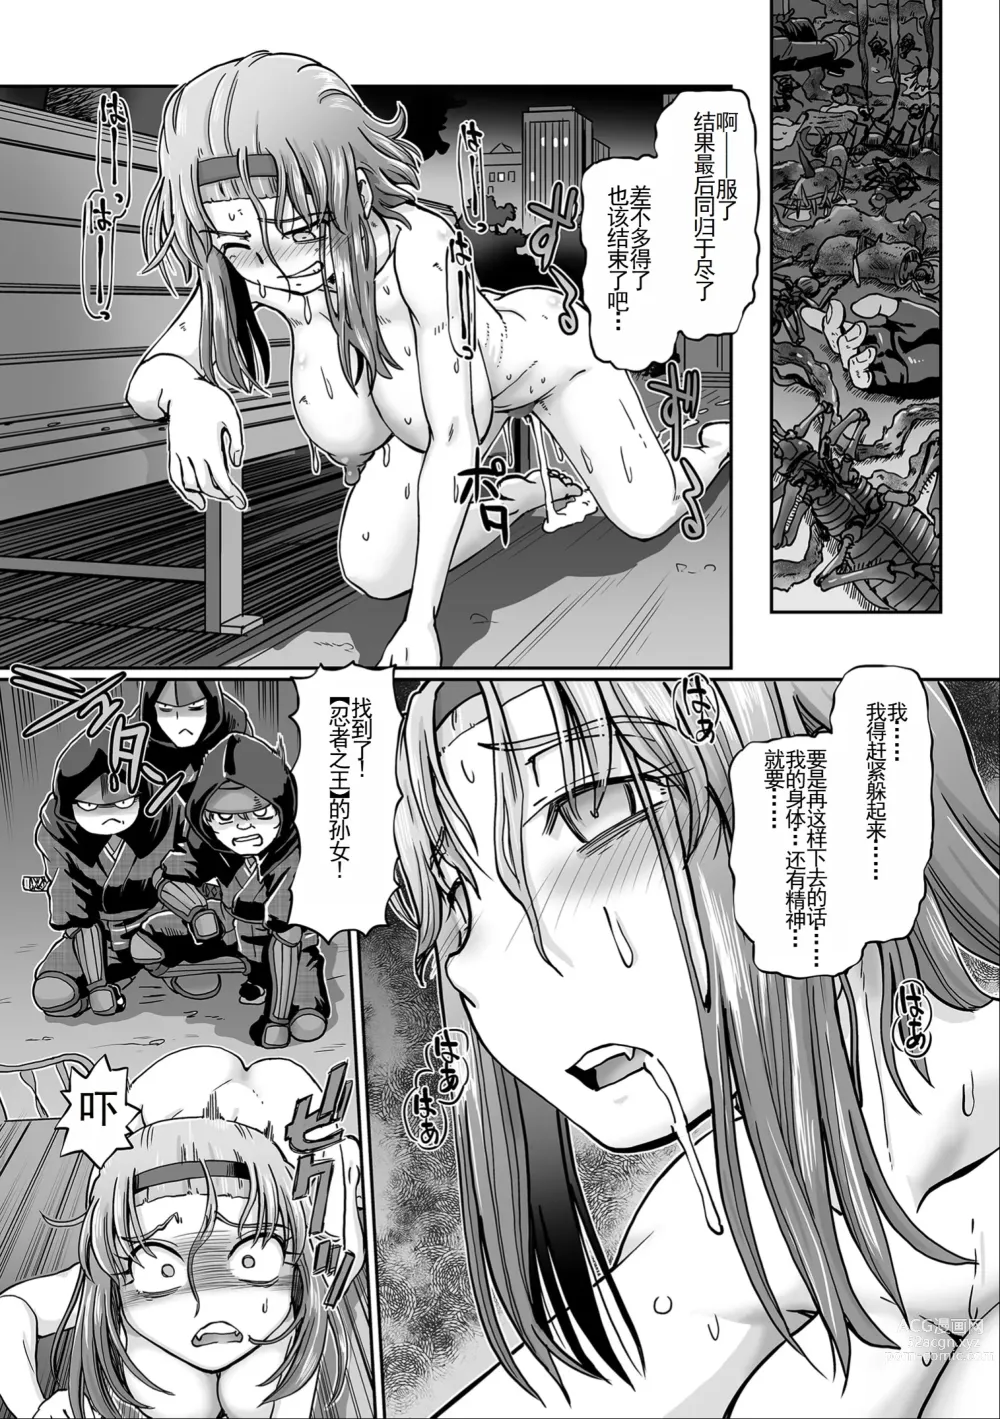 Page 183 of manga JK Ninja Marimo Ninpouchou